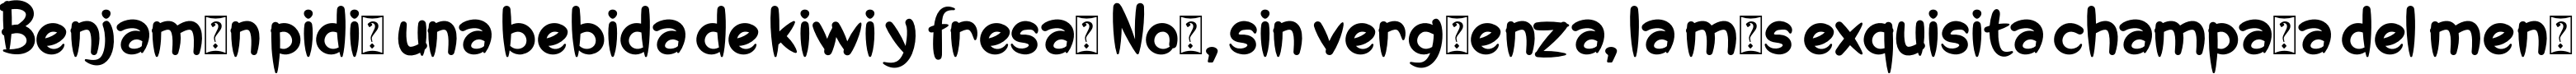 Пример написания шрифтом Twinkle текста на испанском